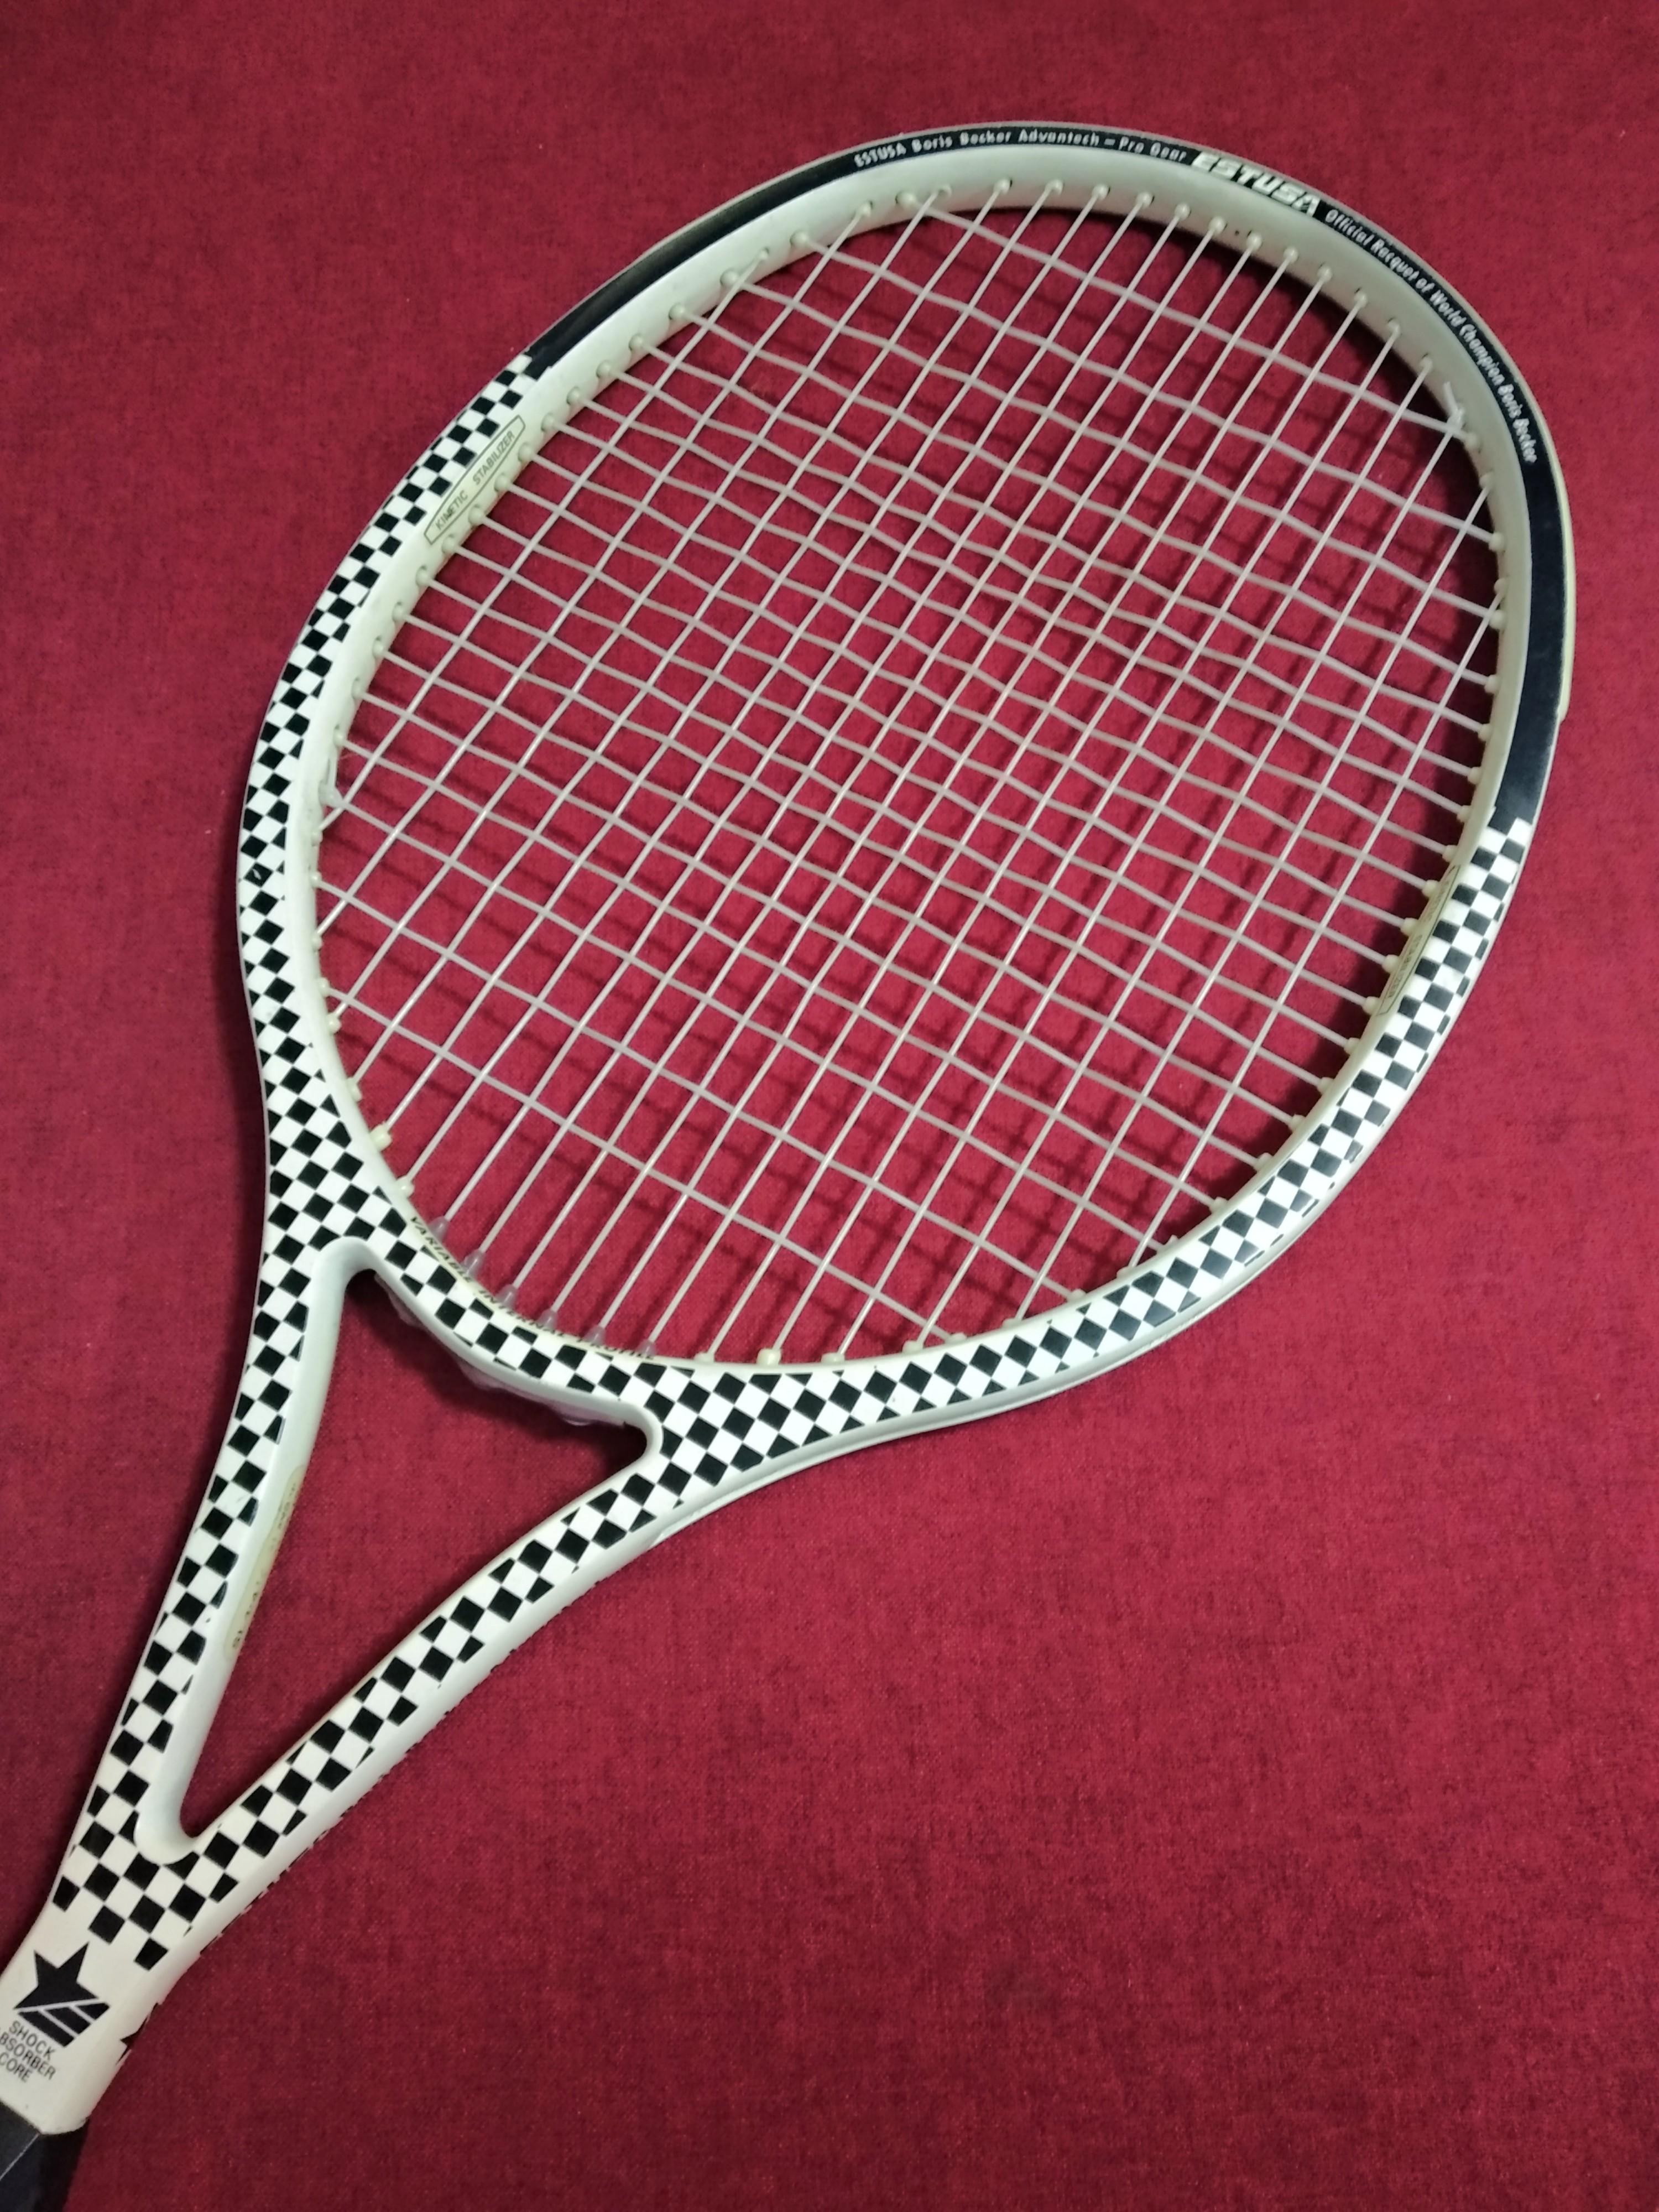 puma racket